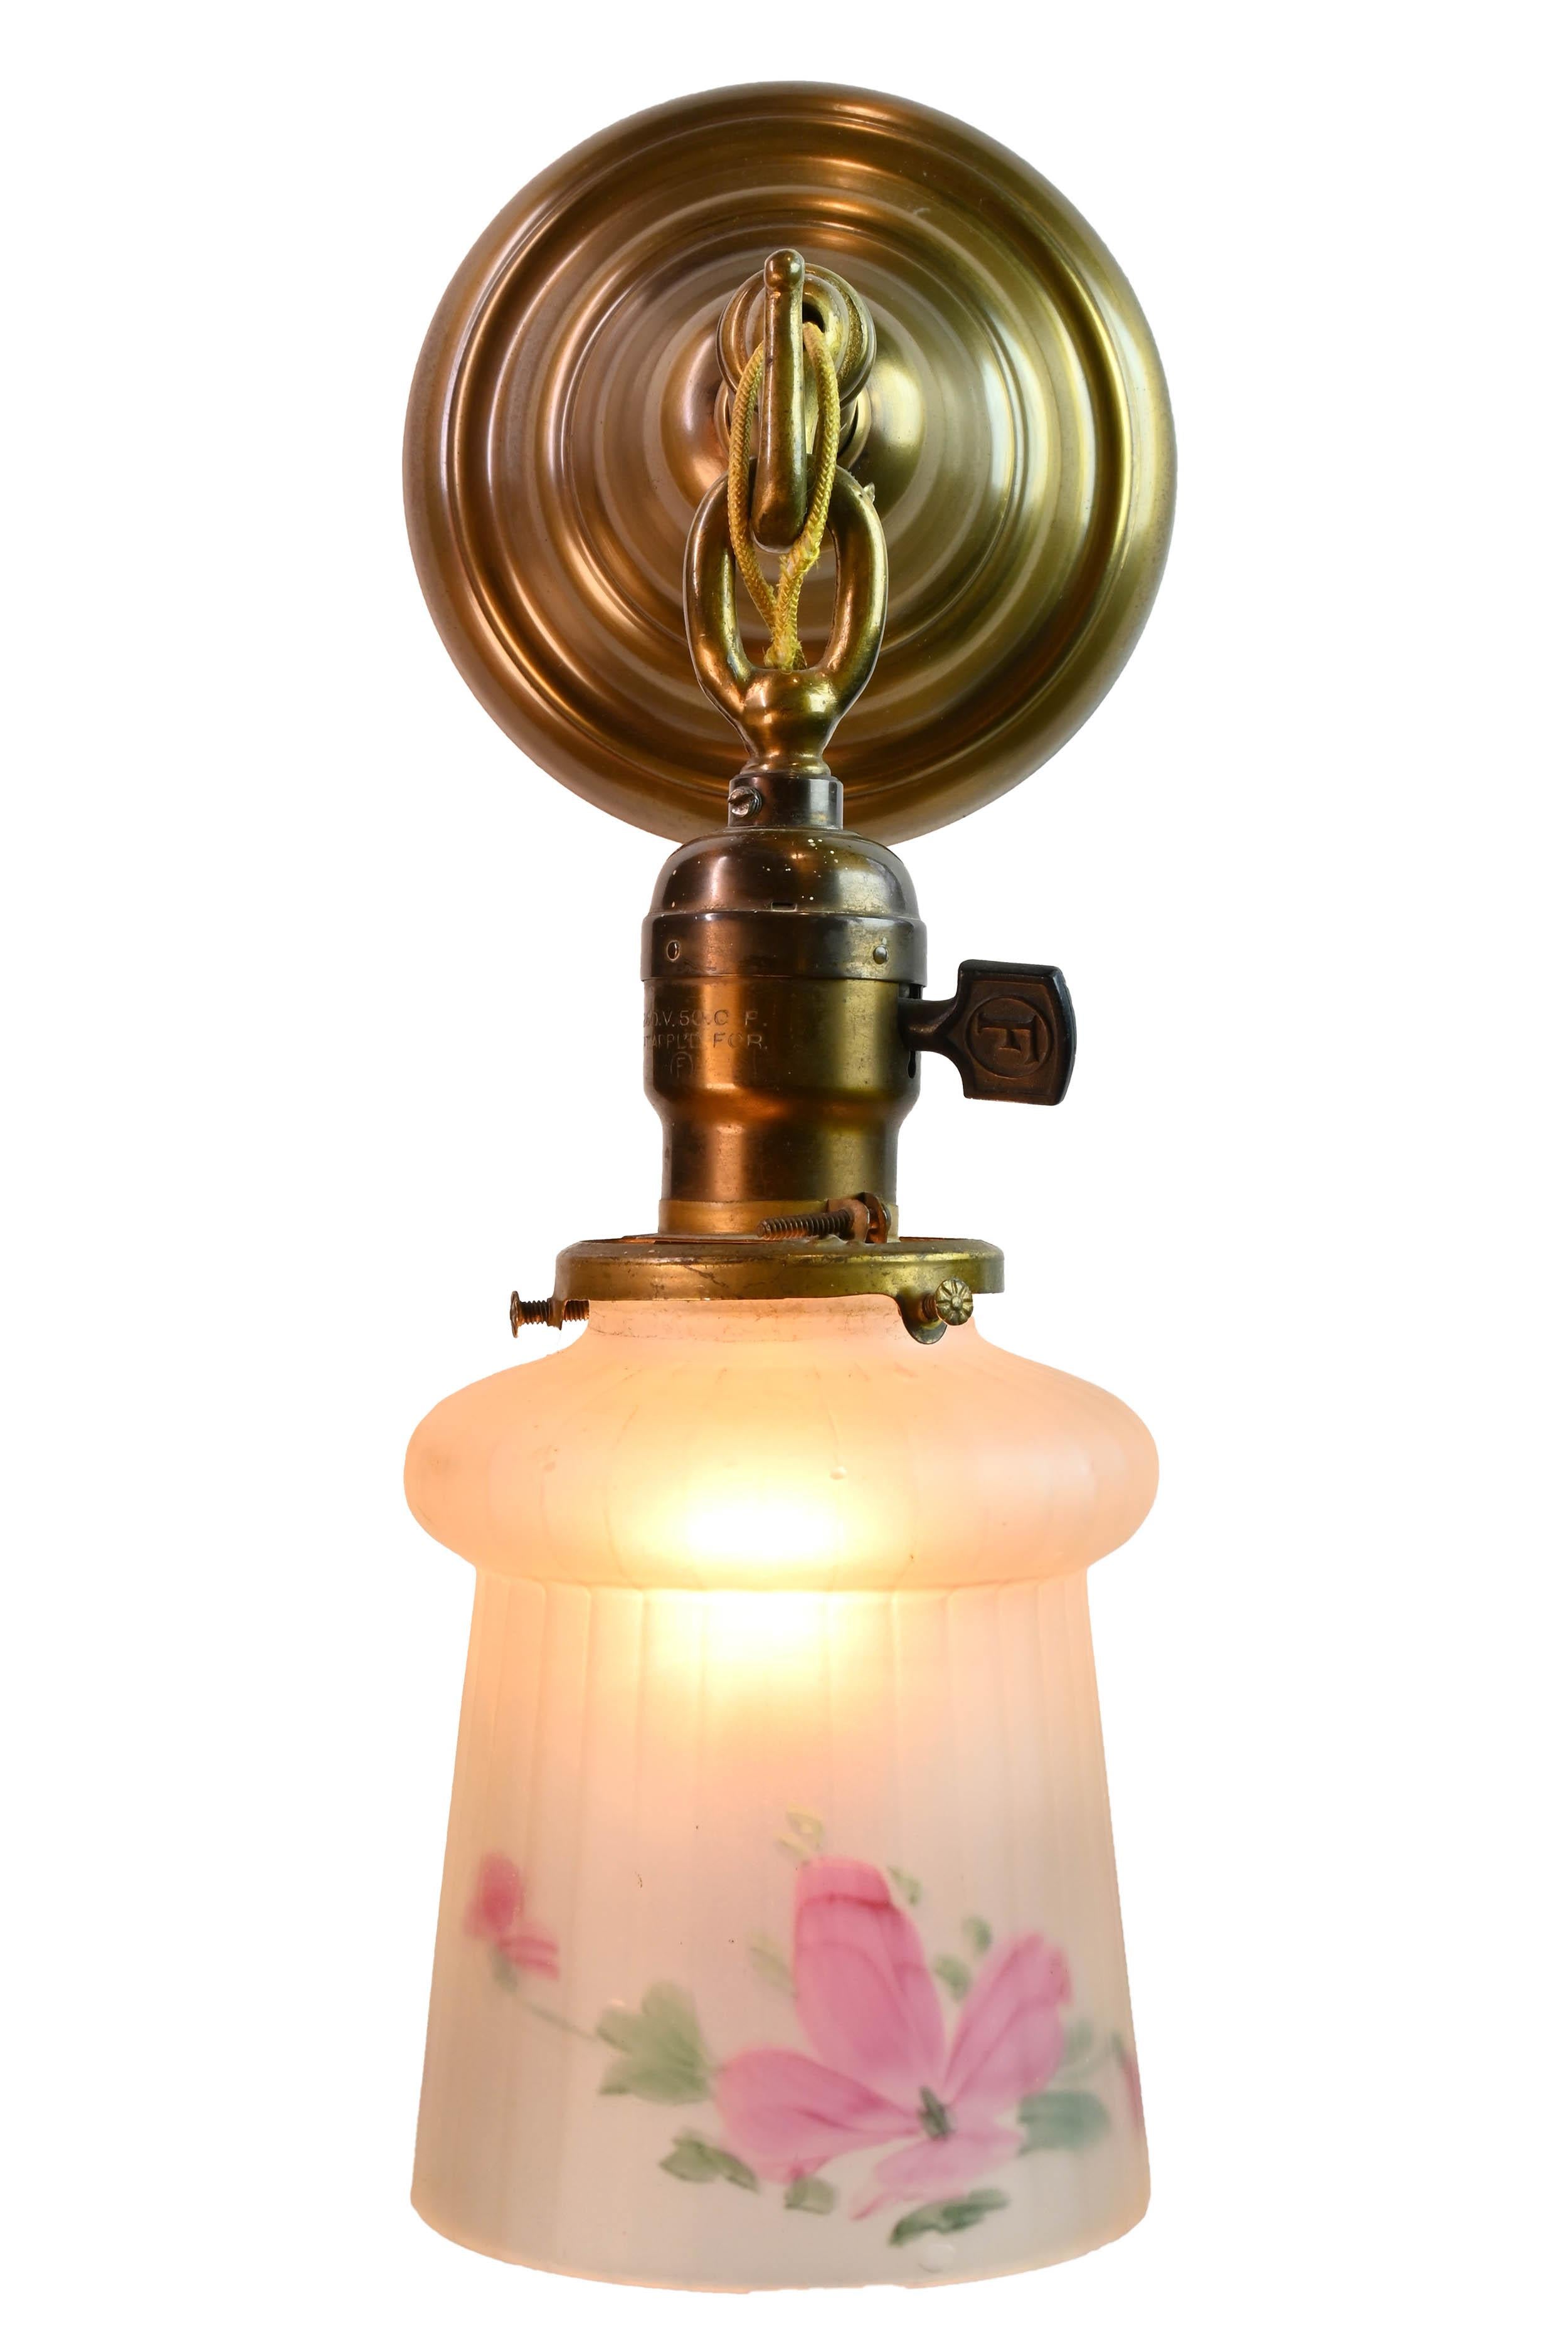 craftsman lamp shade